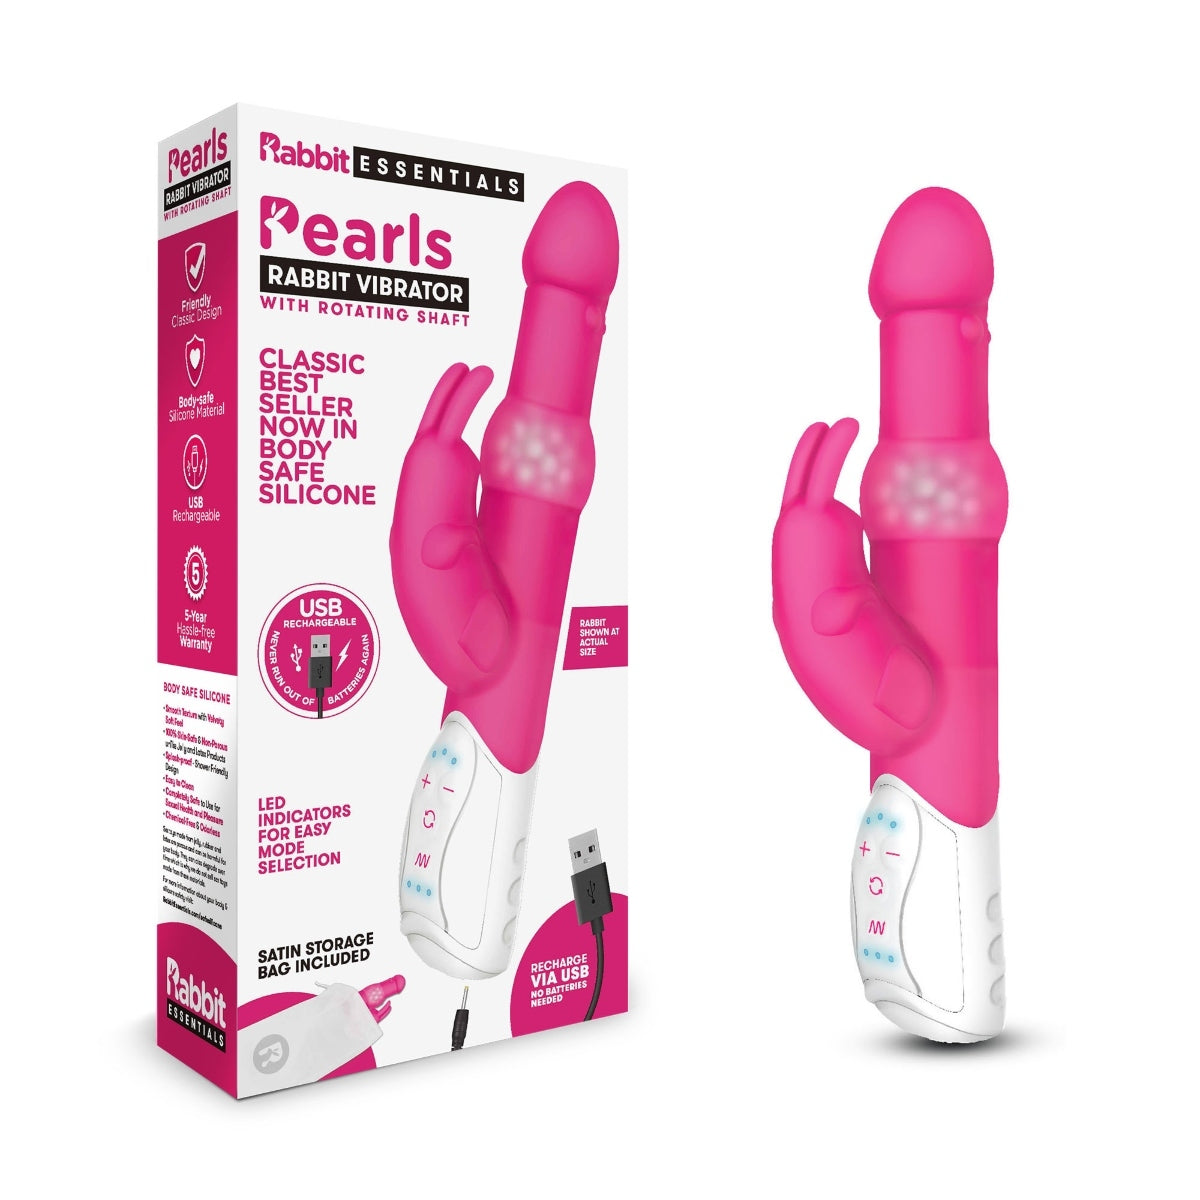 Rabbit Essentials Pearls Rabbit Vibrator With Rotating Shaft Hot Pink